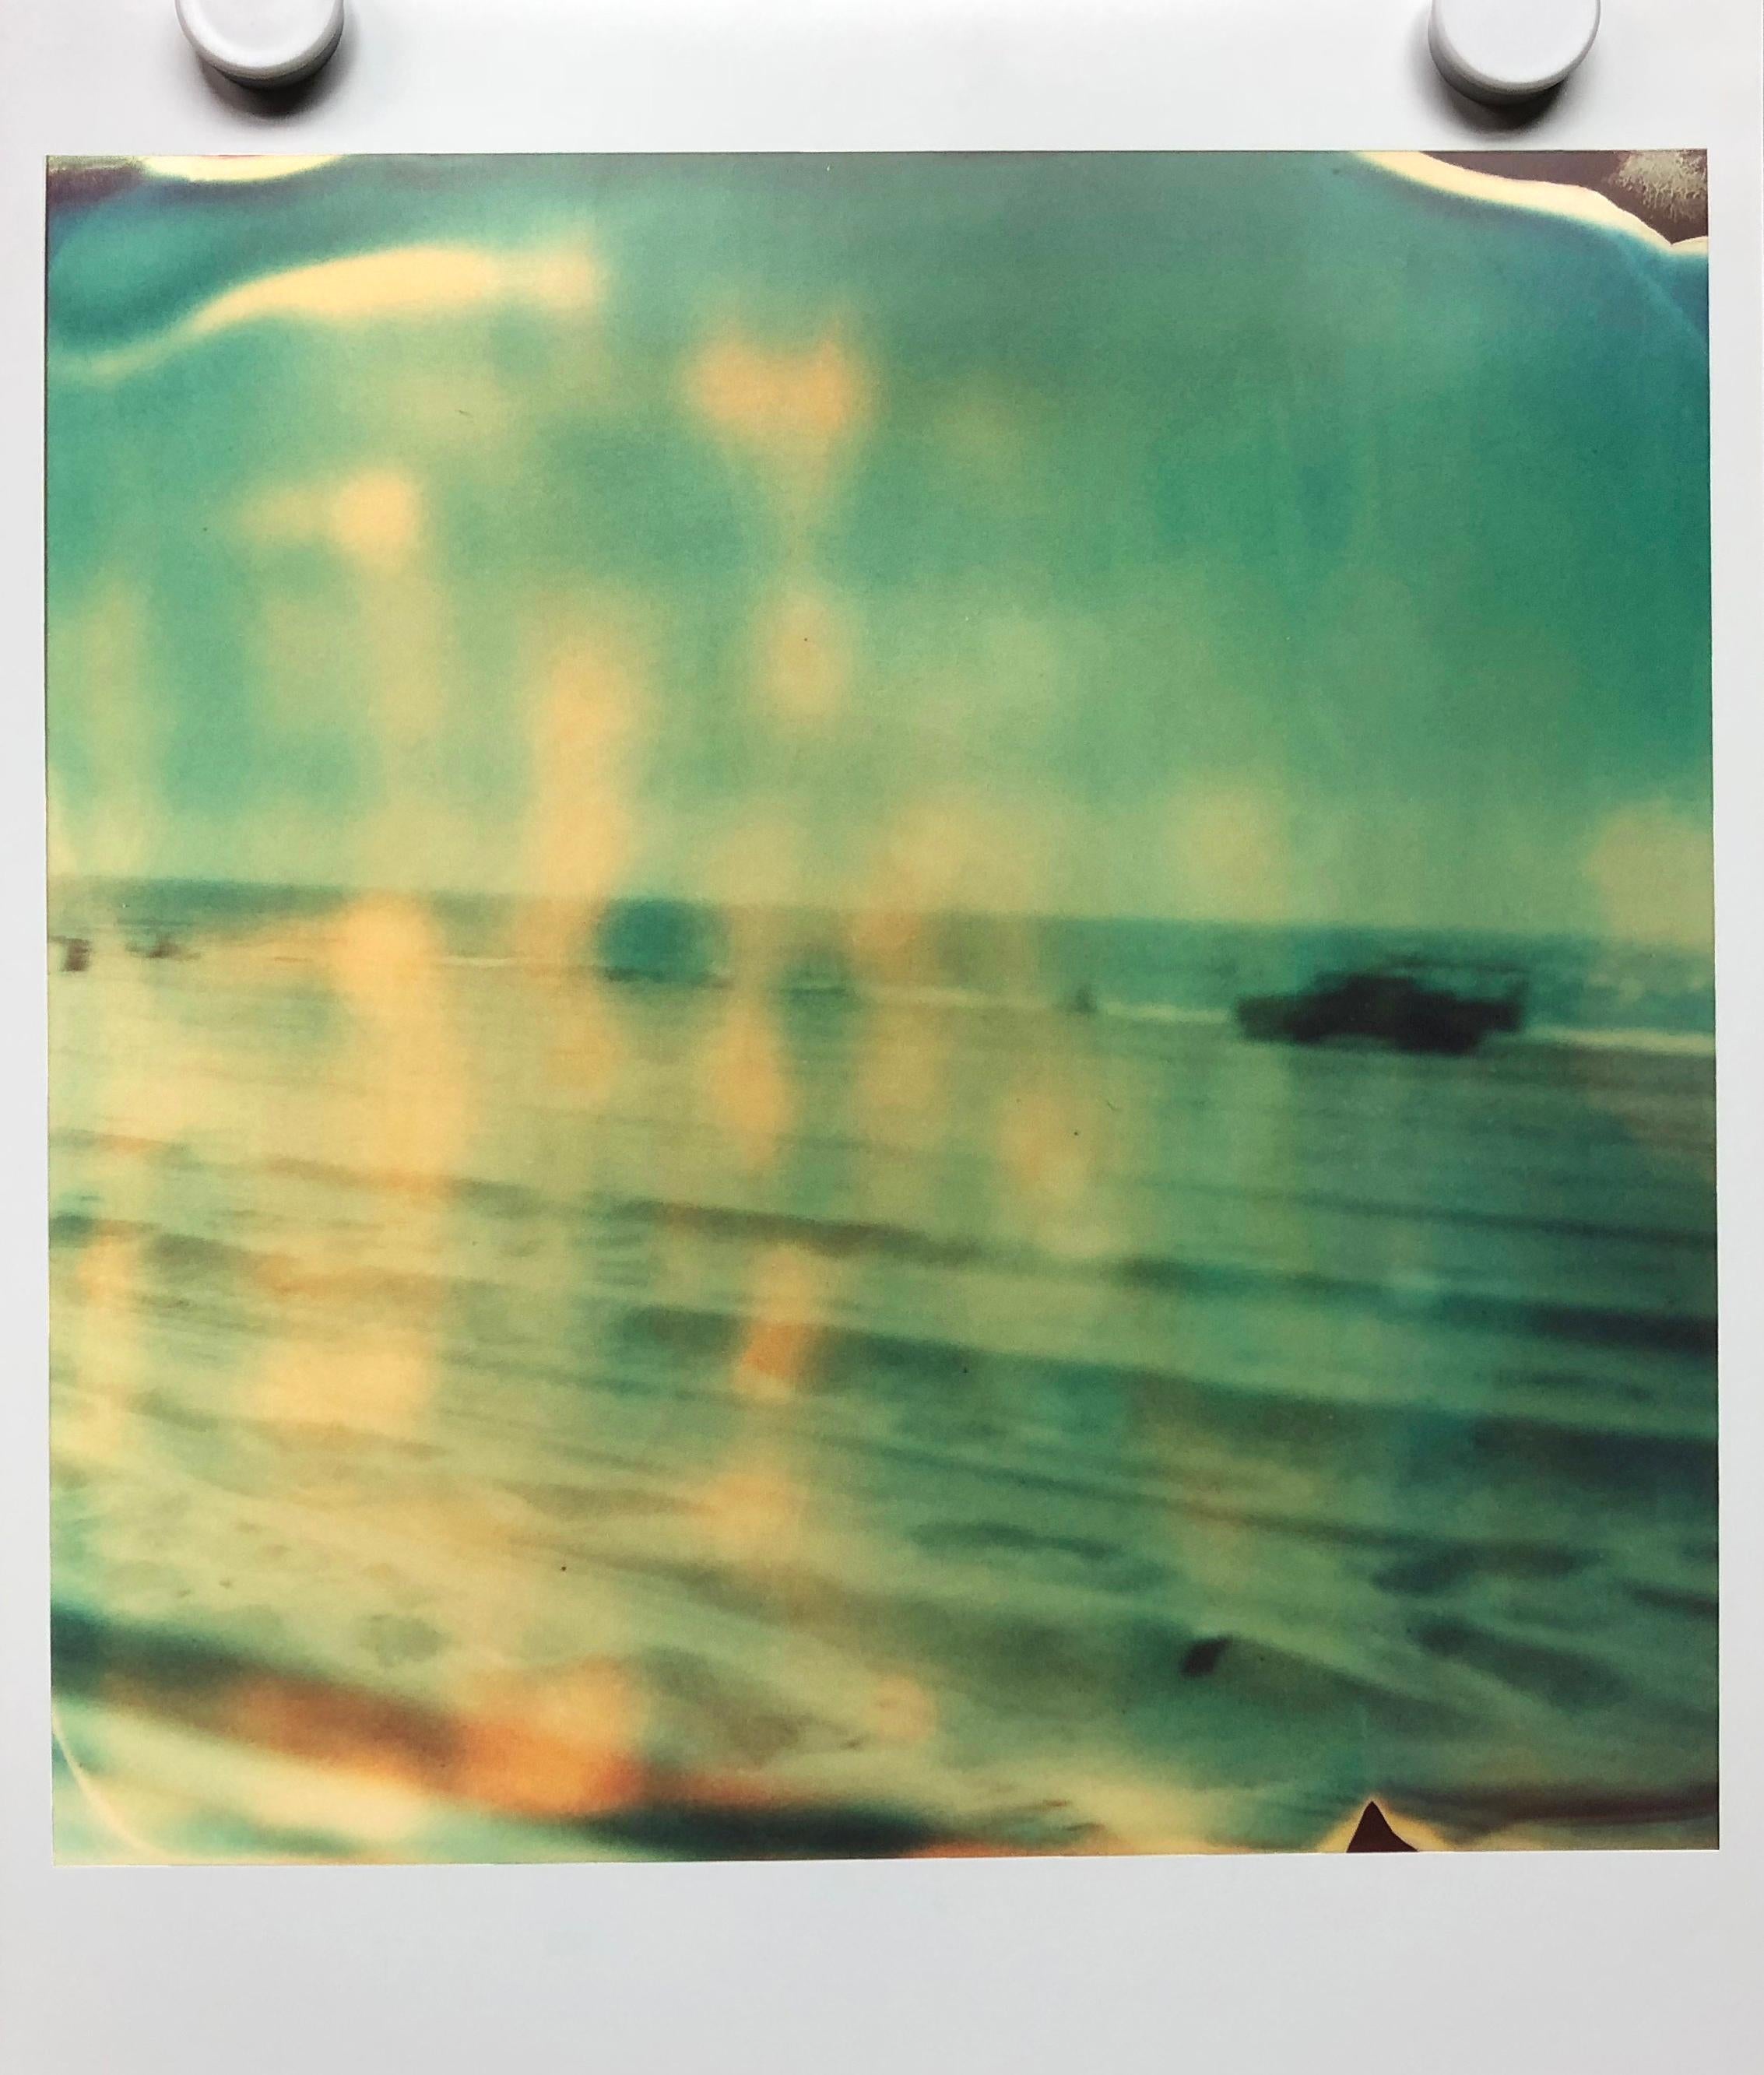 Lifeguard (Malibu) - Contemporary, Landscape, expired, Polaroid, analog - Photograph by Stefanie Schneider